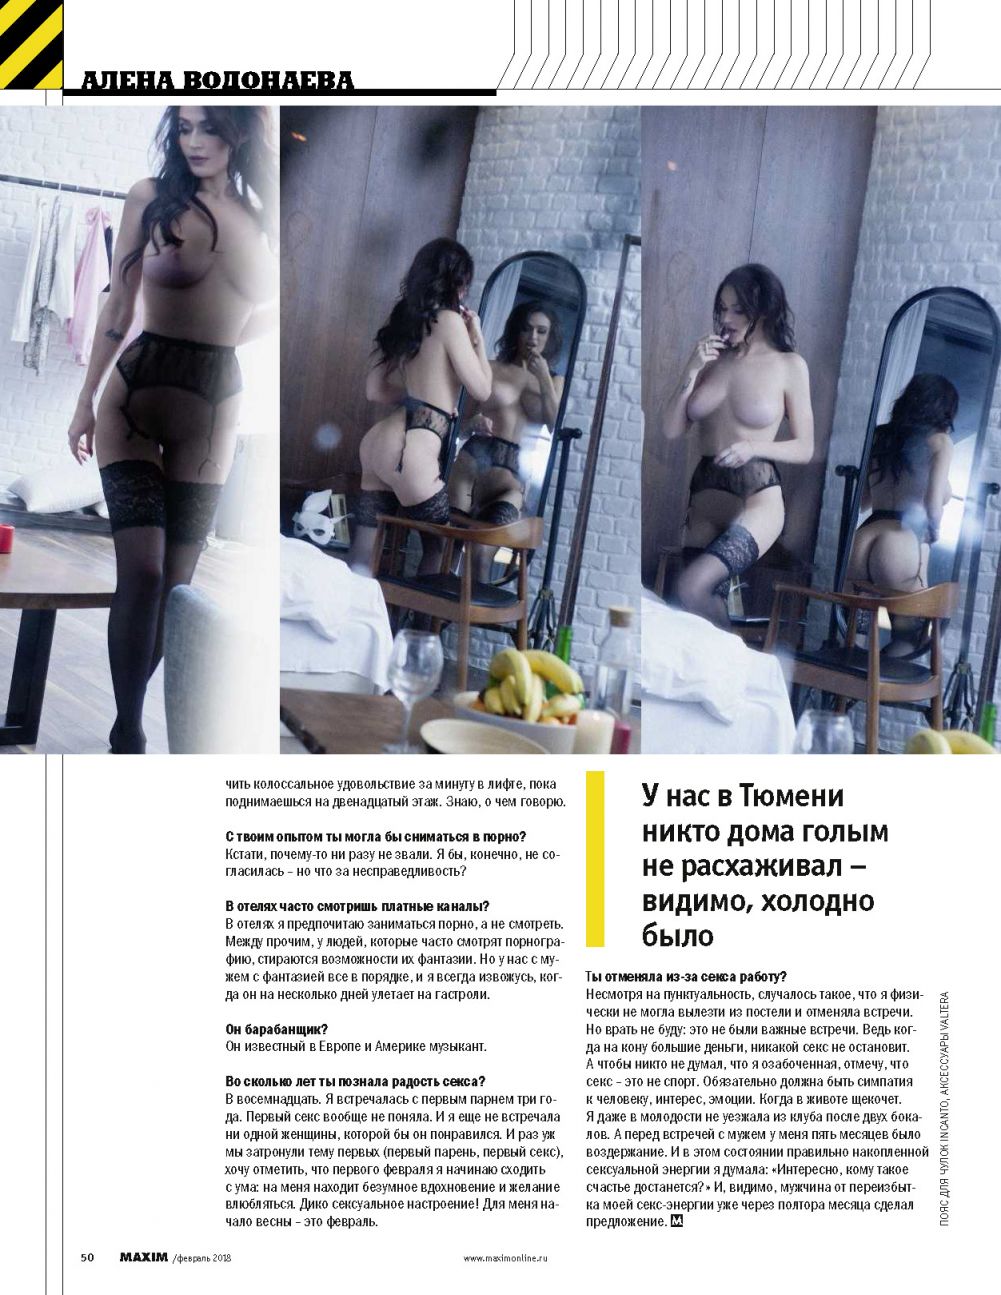 Russian Magazine MAXIM Alena Vodonaeva February 02/2018 Russia. Rating =  7.35/10